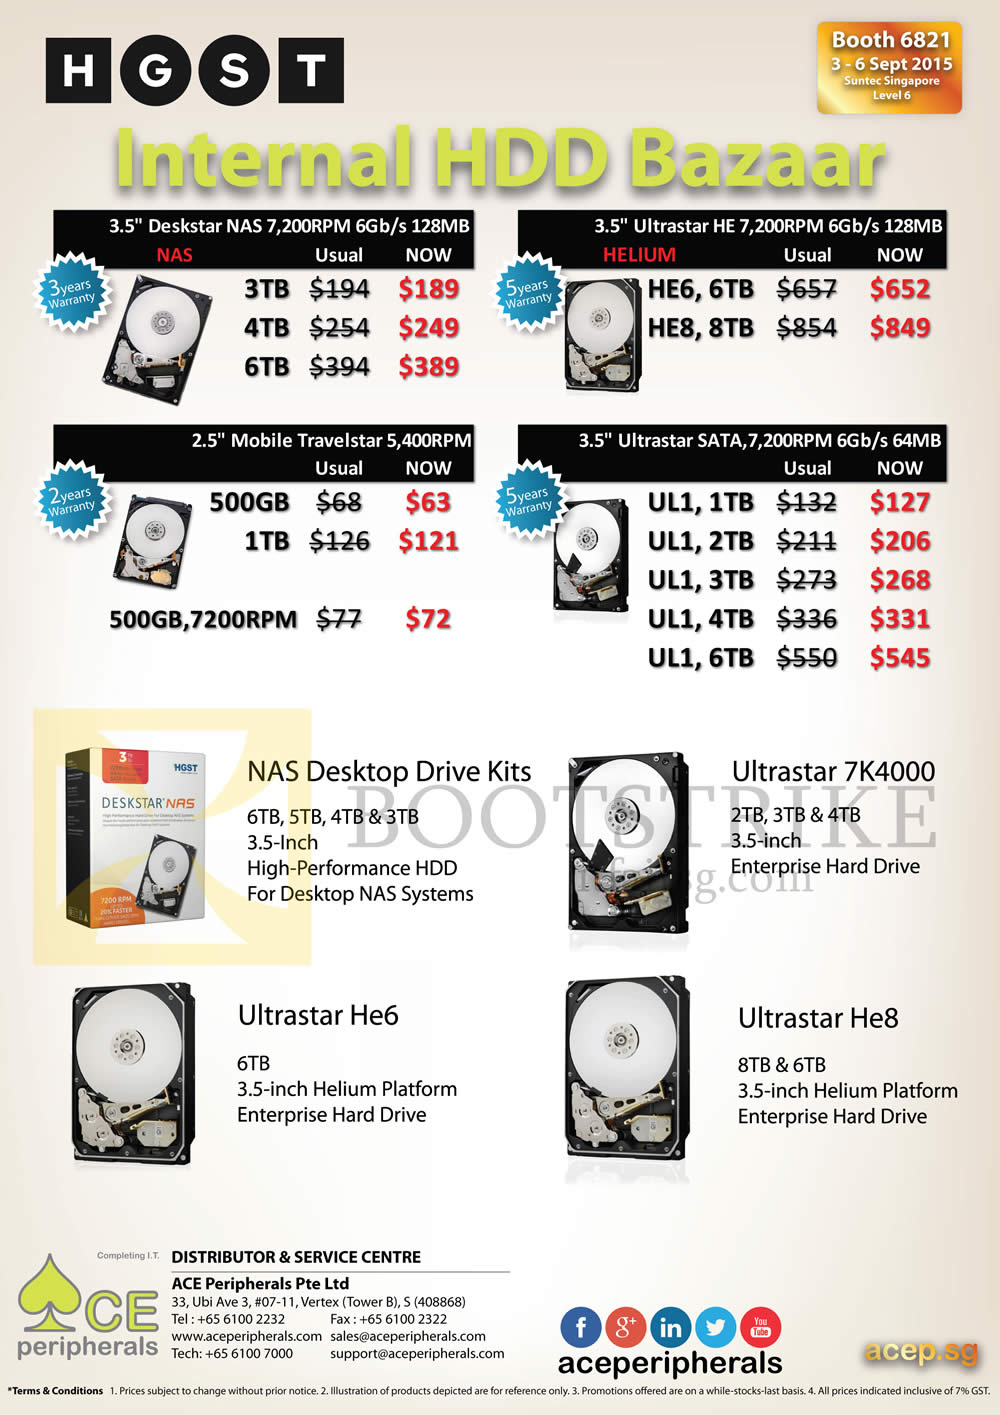 COMEX 2015 price list image brochure of Ace Peripherals Inter HDD Bazaar WD Green, Red, Black, Deskstar NAS, Ultrastar, Mobile Travelstar, NAS Desktop Drive Kit, Ultrastar 7K4000, Ultrastar He6, He8